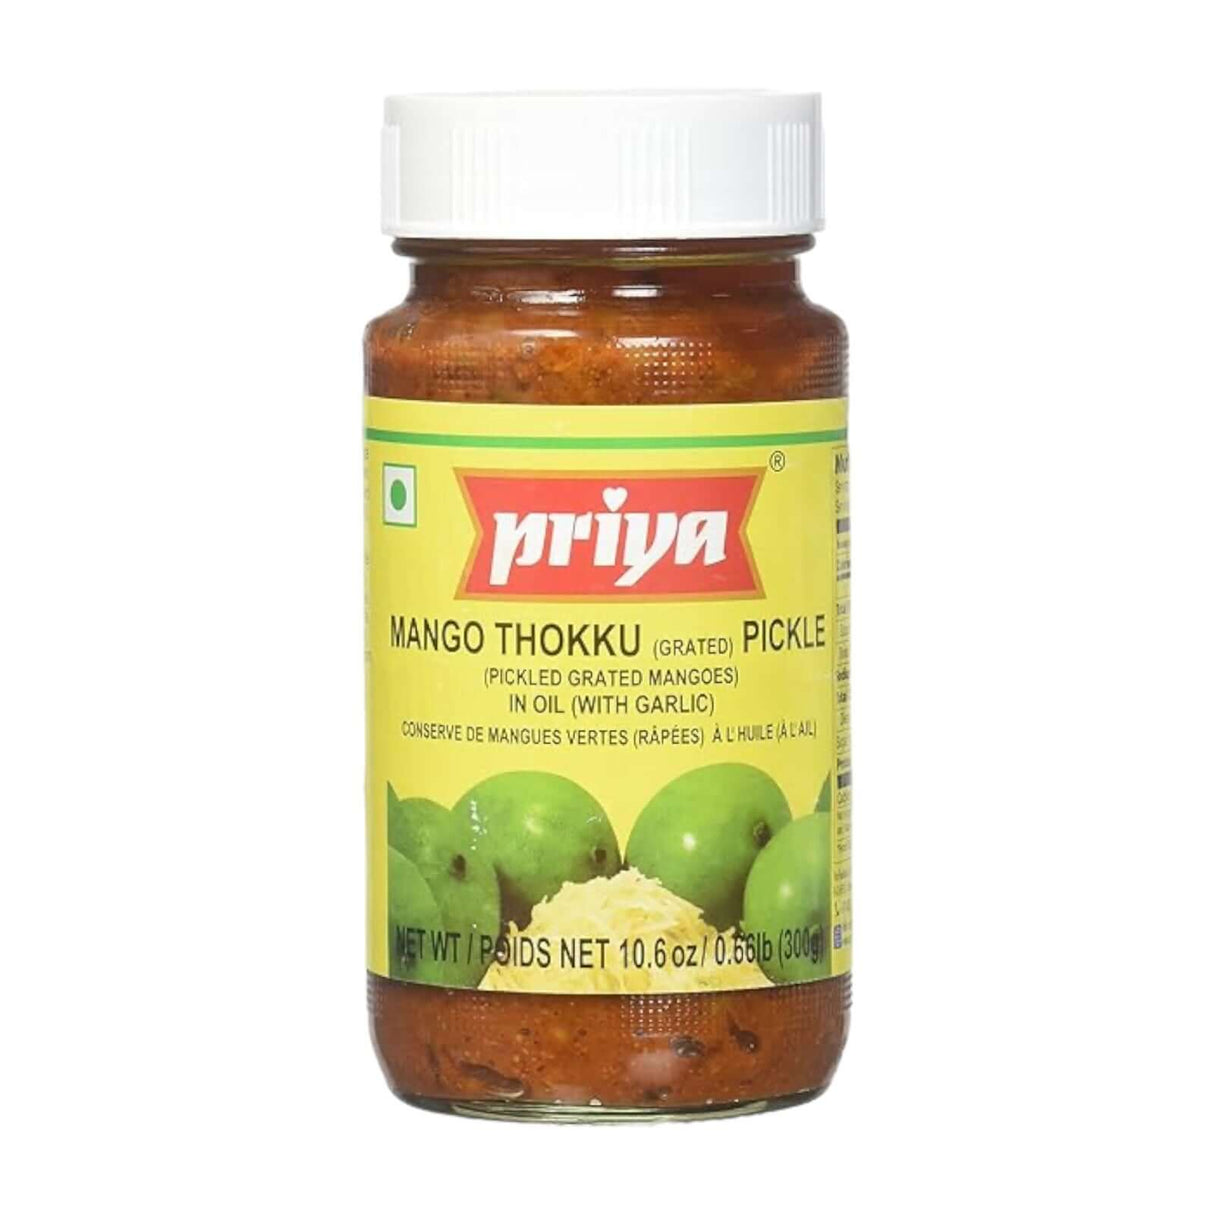 Priya Mango Thokku (Grated) Pickle in Oil (with Garlic)